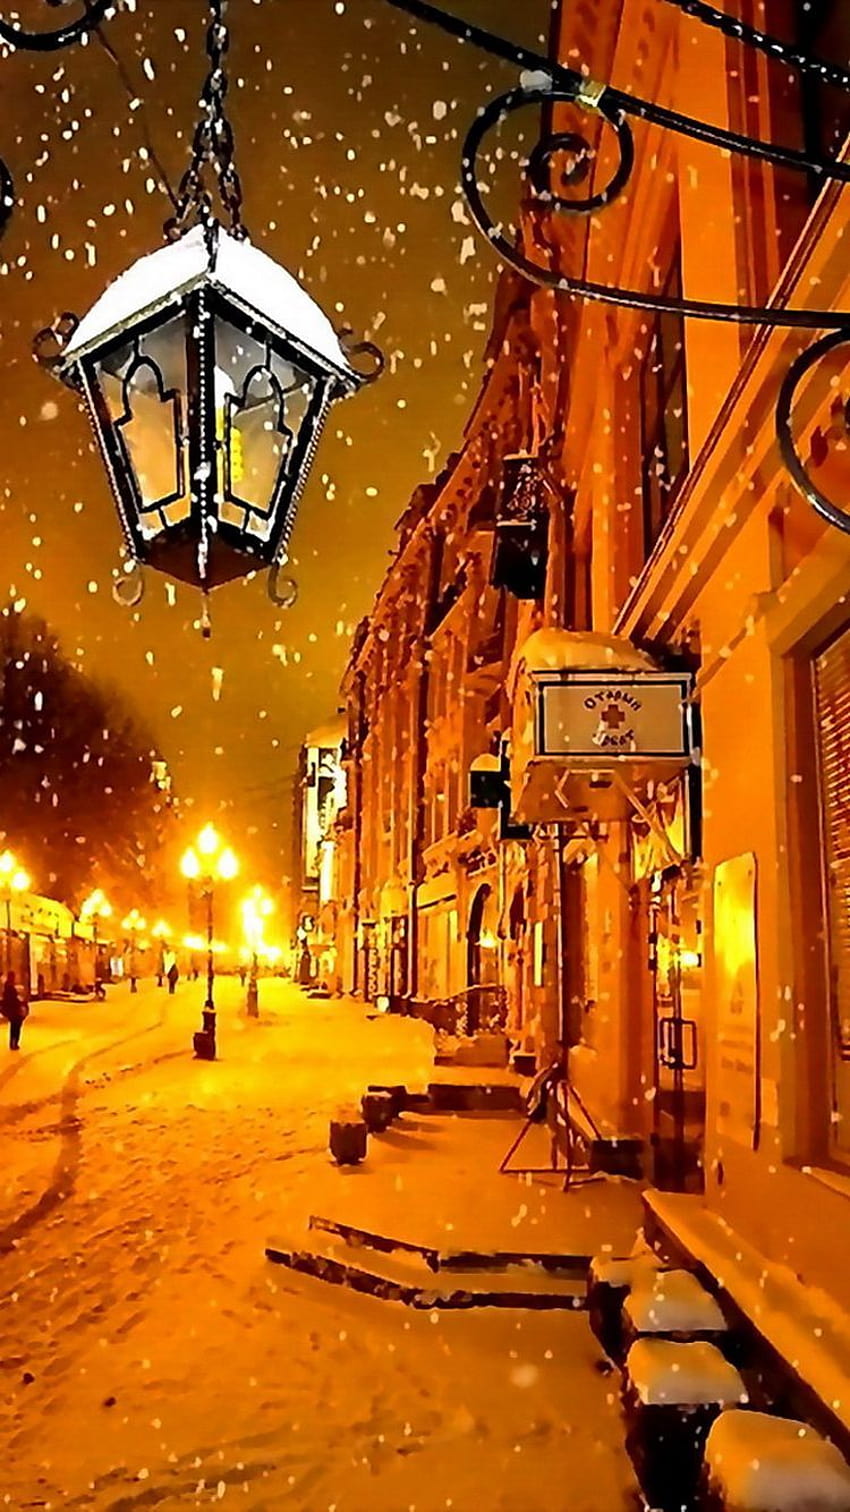 winter city night wallpaper hd